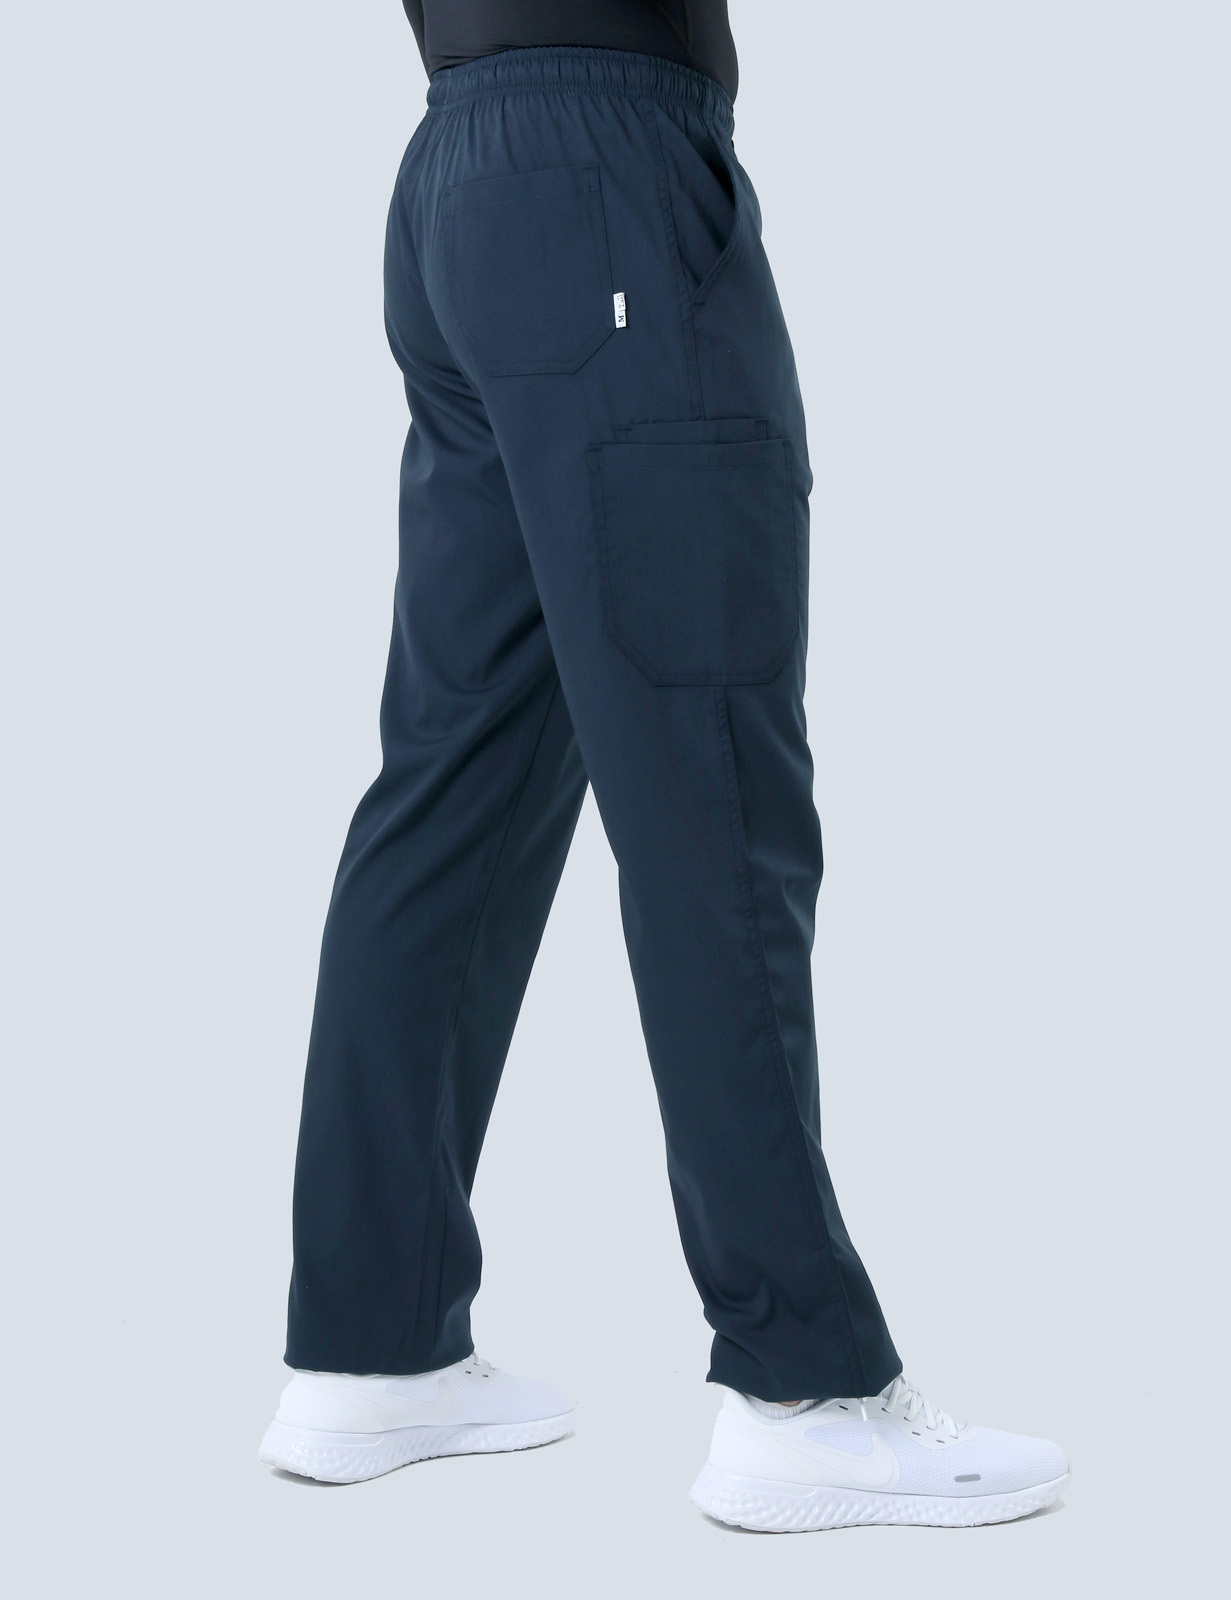 Men's Cargo Performance Pants - Navy - Large - Tall - 1